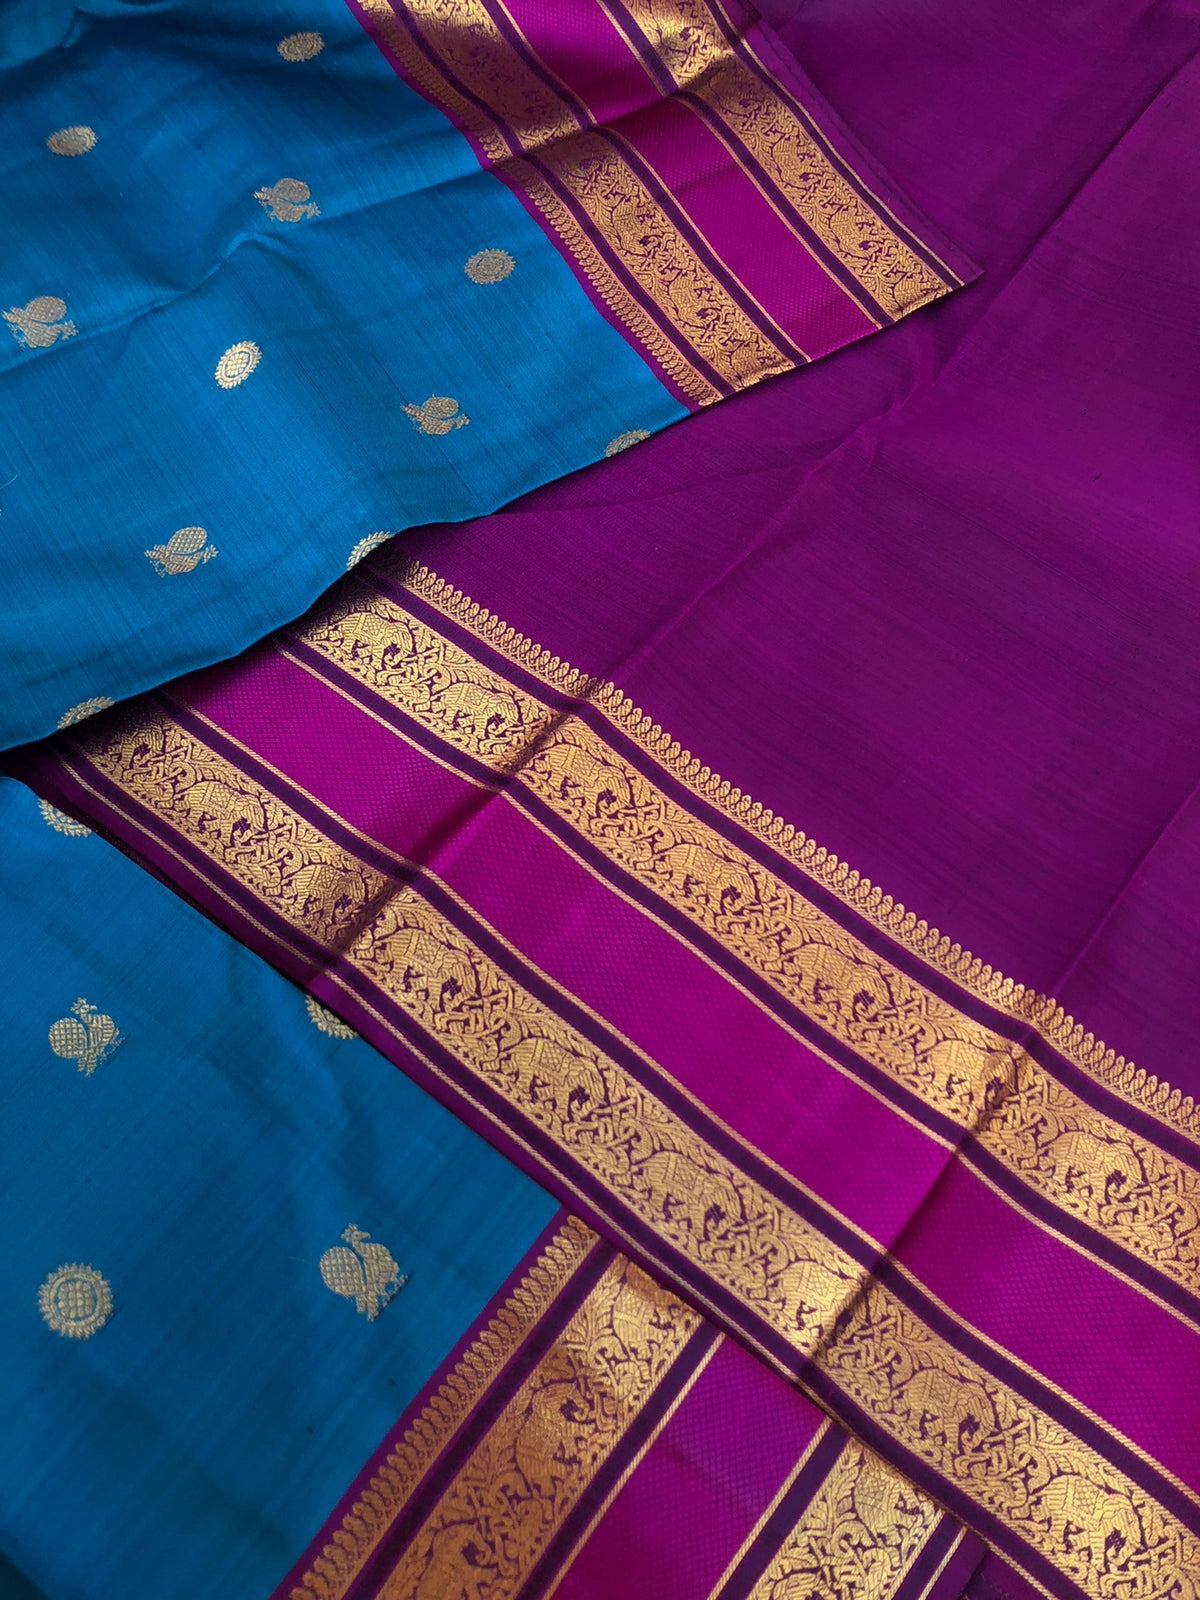 Kaviyam on Kanchivarams - the most beautiful peacock blue with purple intricate gold zari woven pallu with elephant motifs woven retta pett borders